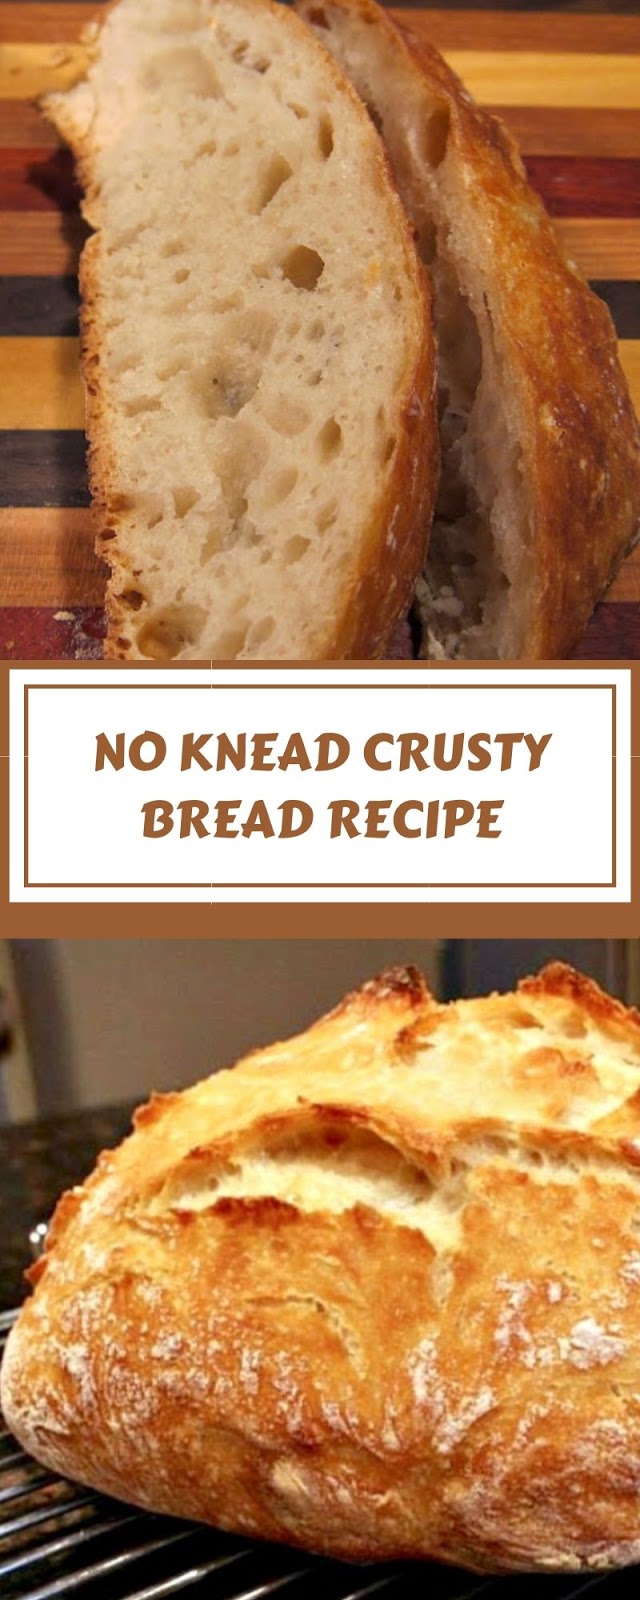 NO KNEAD CRUSTY BREAD RECIPE